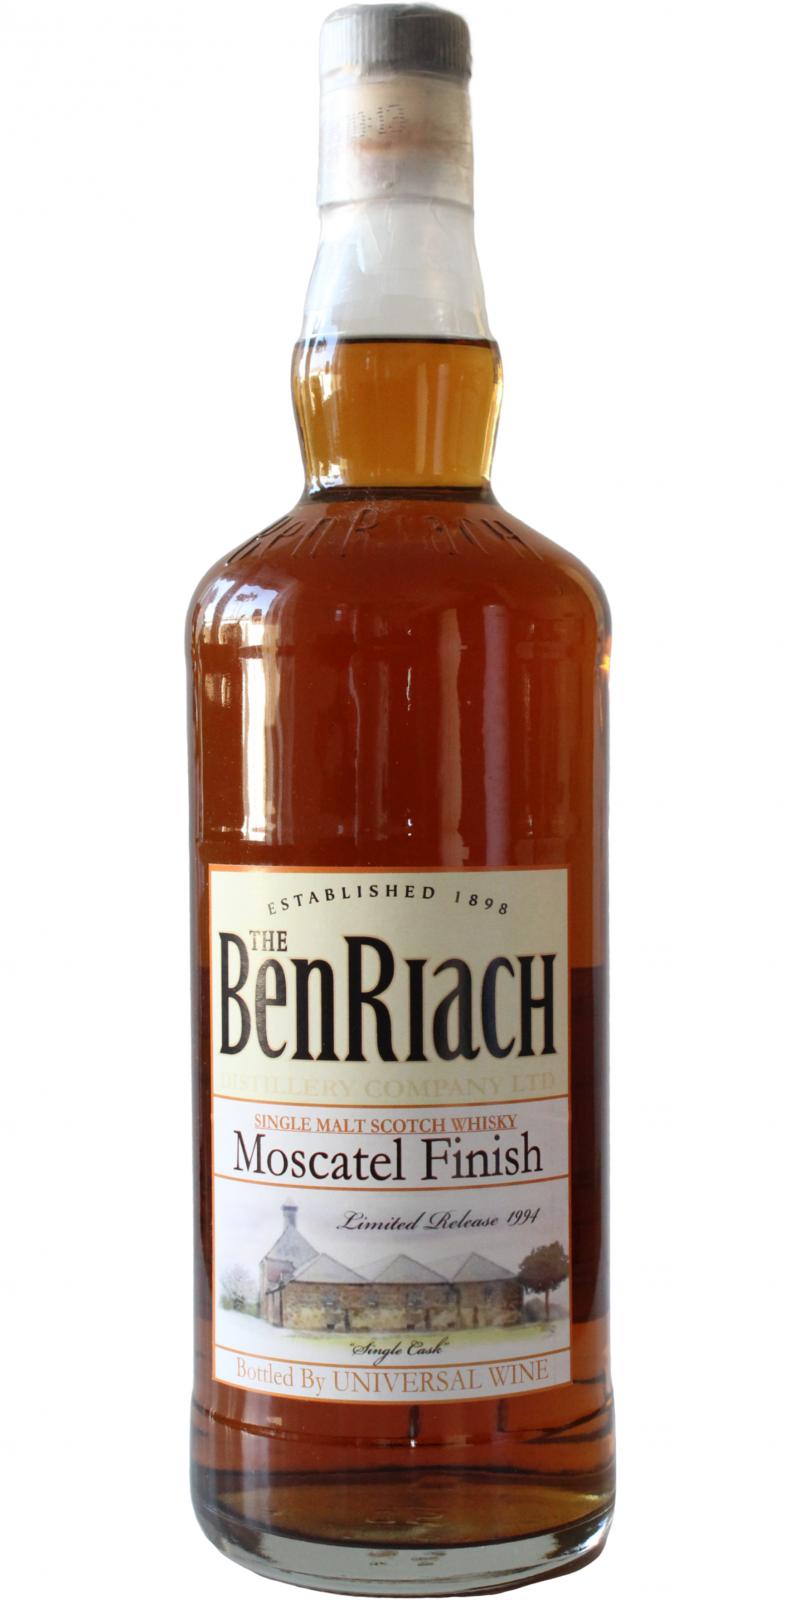 BenRiach 1994 Moscatel Finish #1713 Universal Wine Belgium 58.3% 700ml